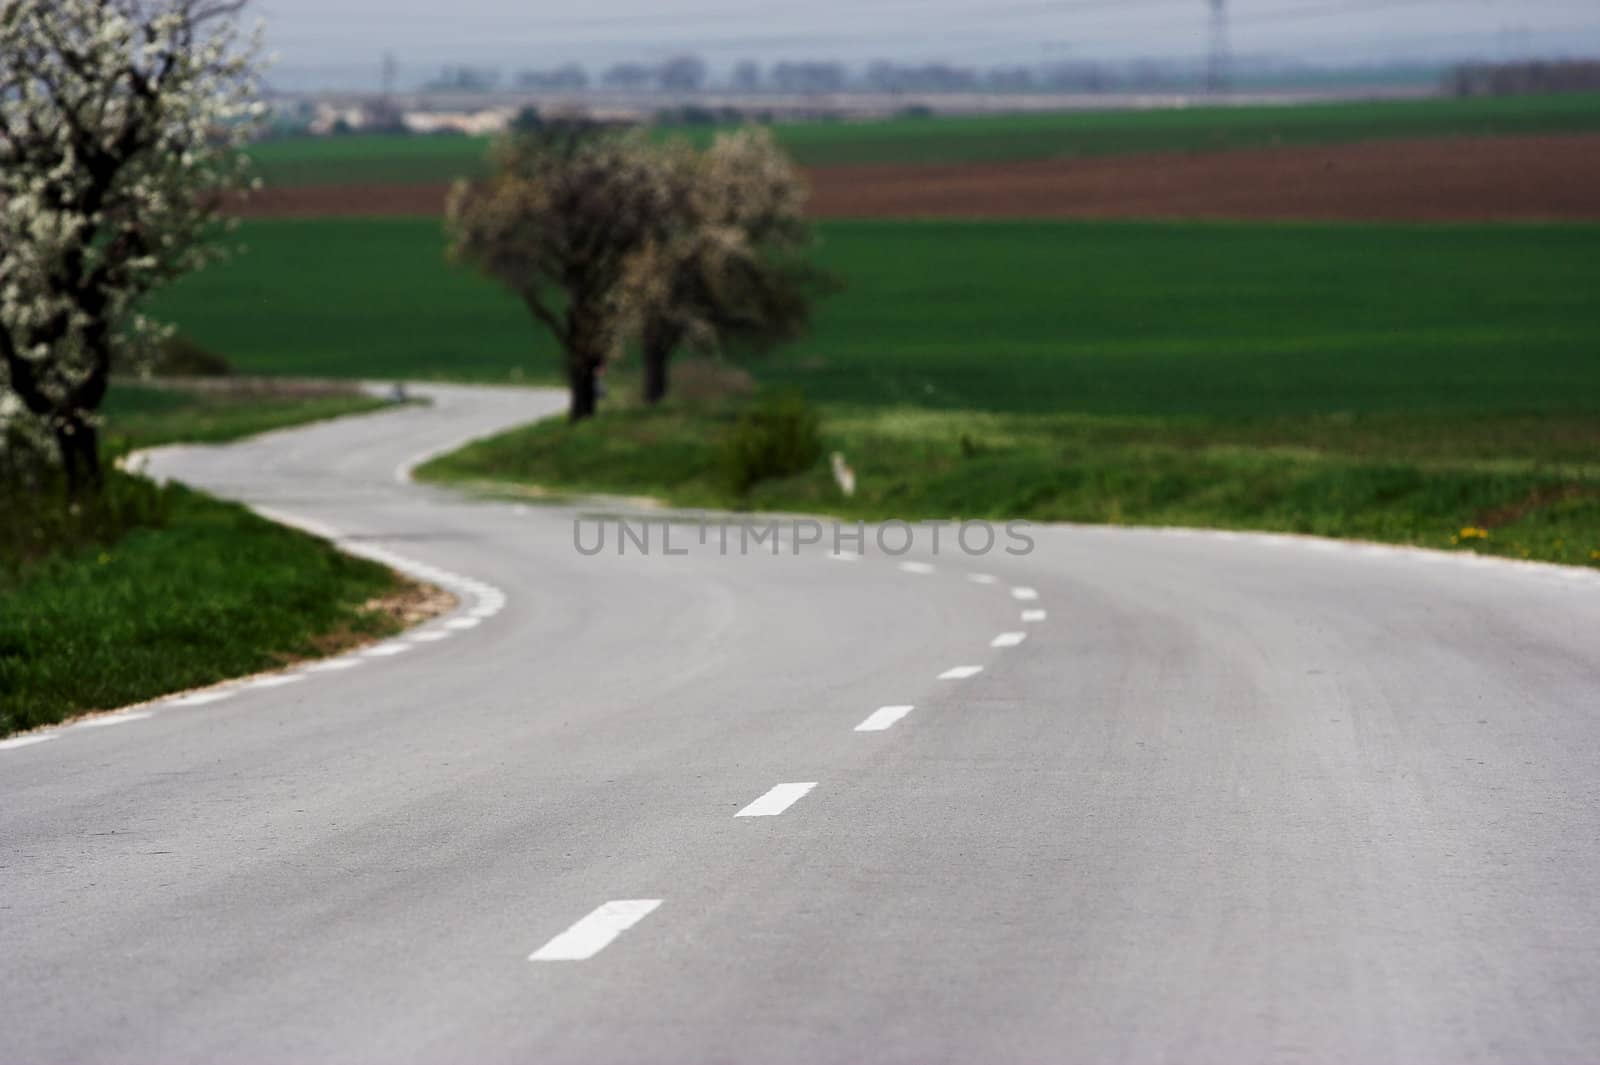  road in countryside by alexkosev